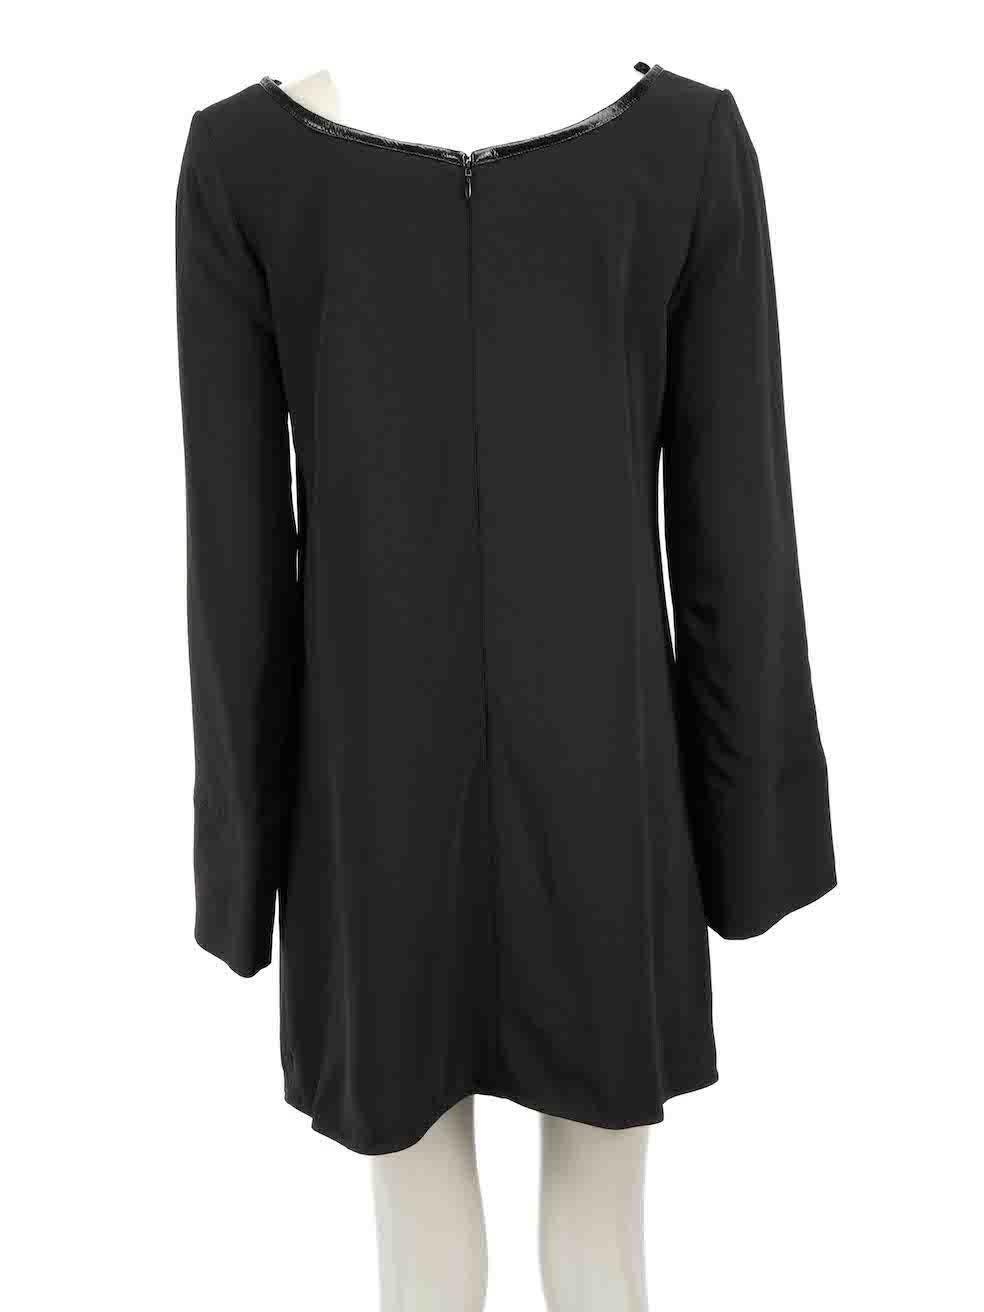 Courrèges Black Square Neckline Mini Dress Size M In Excellent Condition For Sale In London, GB